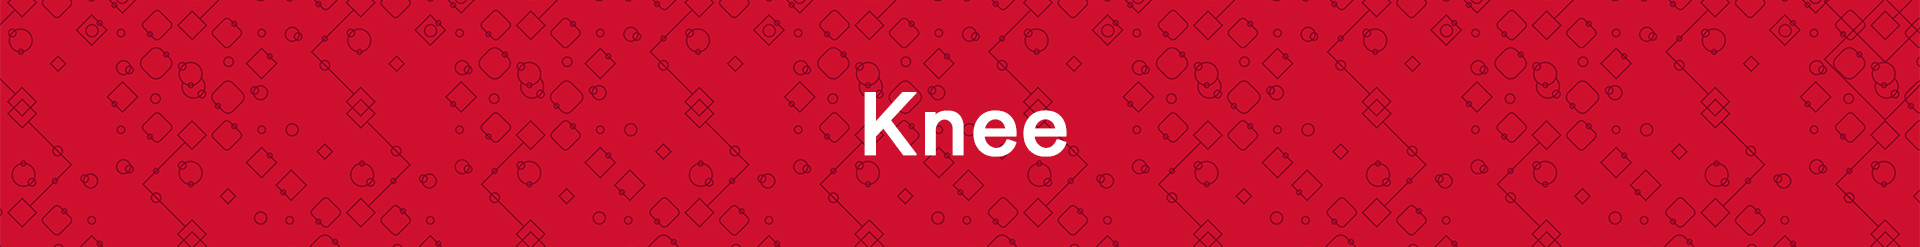 Sports Medicine Knee Image